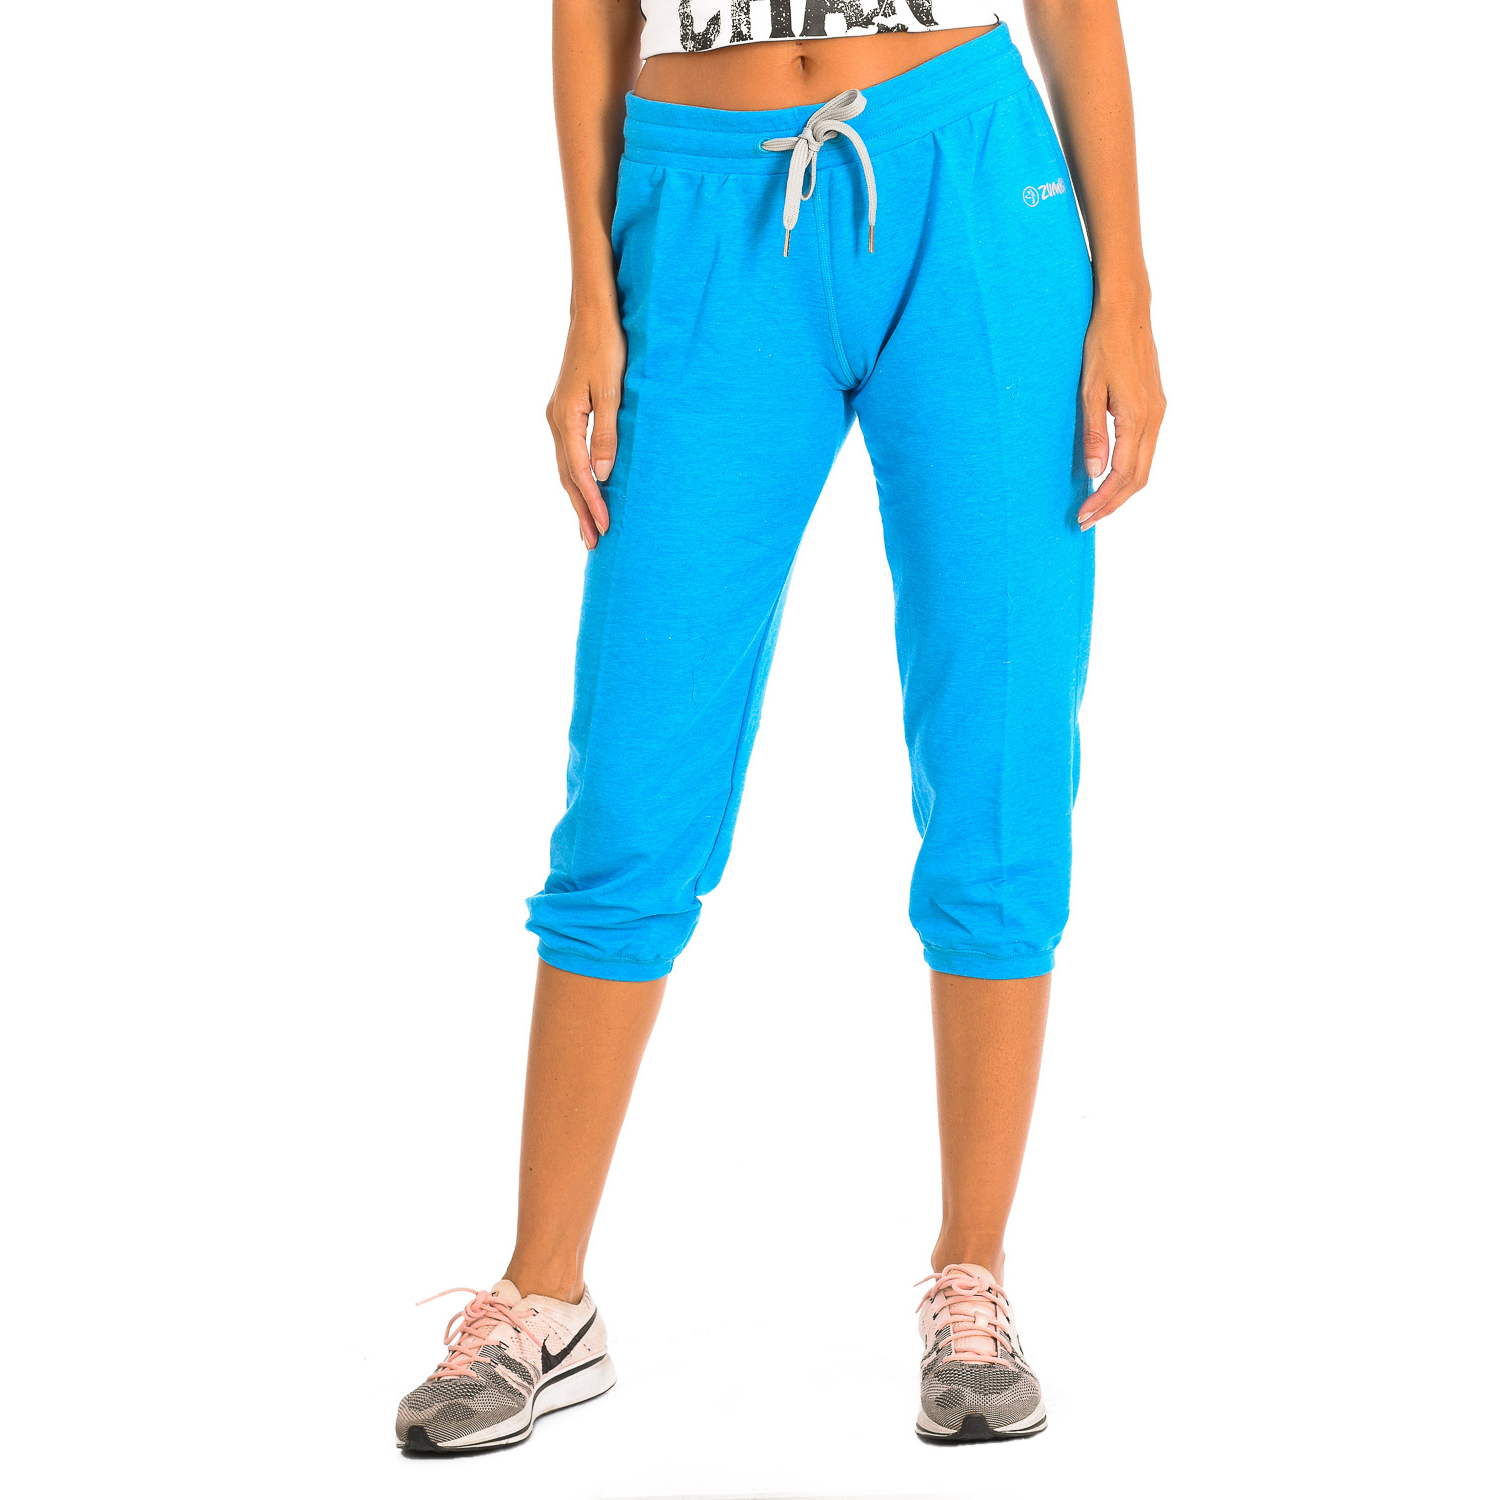 Pantalones deportivos azules de mujer